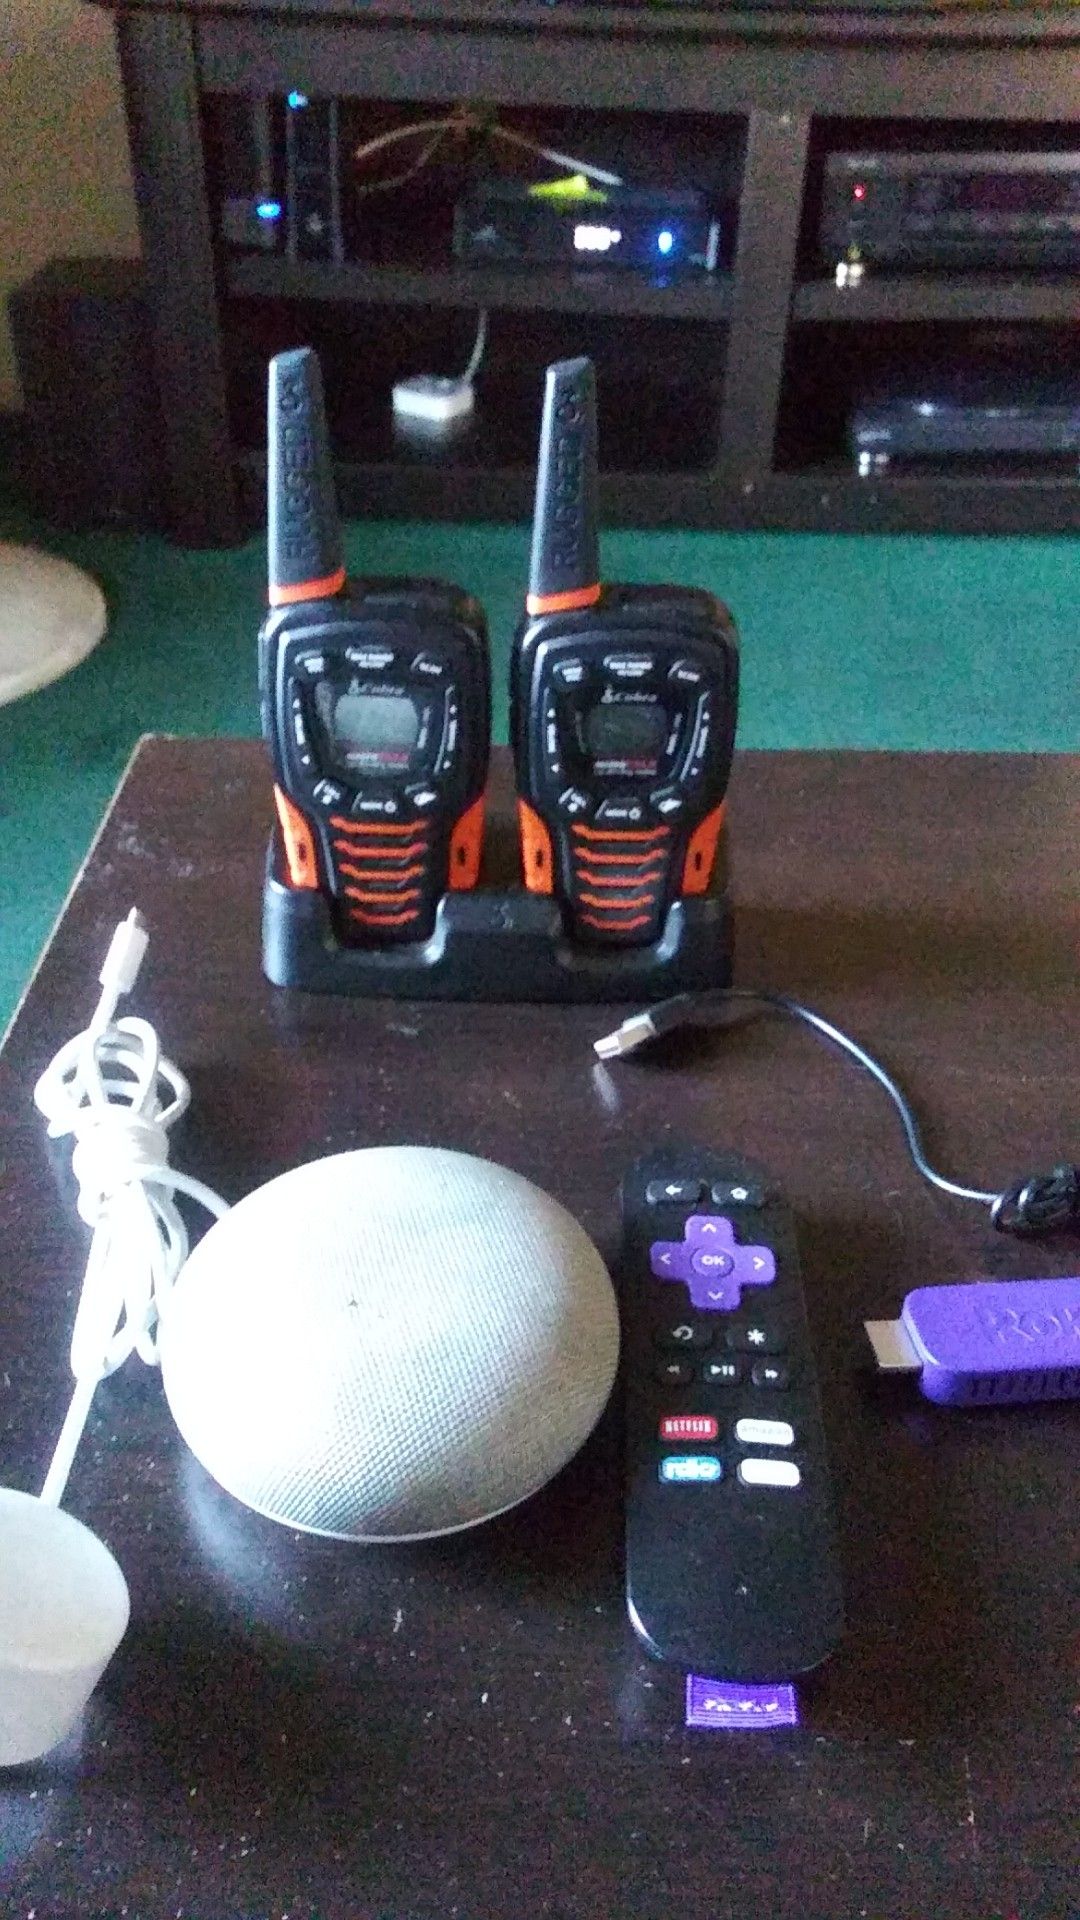 Google home mini, roku stick w/ remote, cobra 22 channel long range walkie talkies (35 mile range)